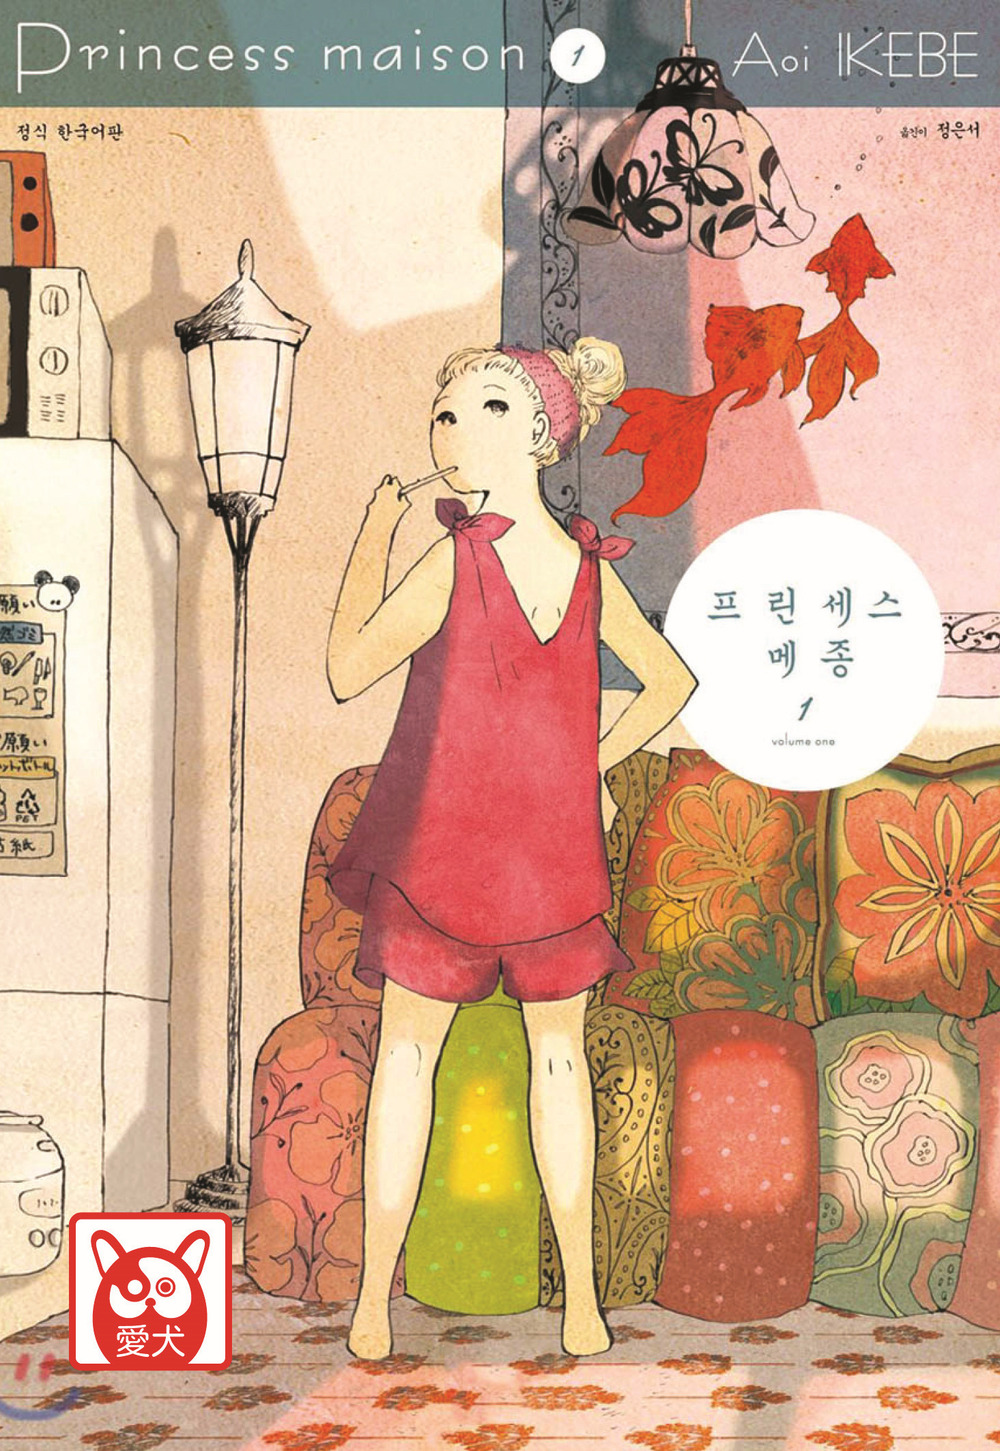 Aoi Ikebe - Princess Maison #01